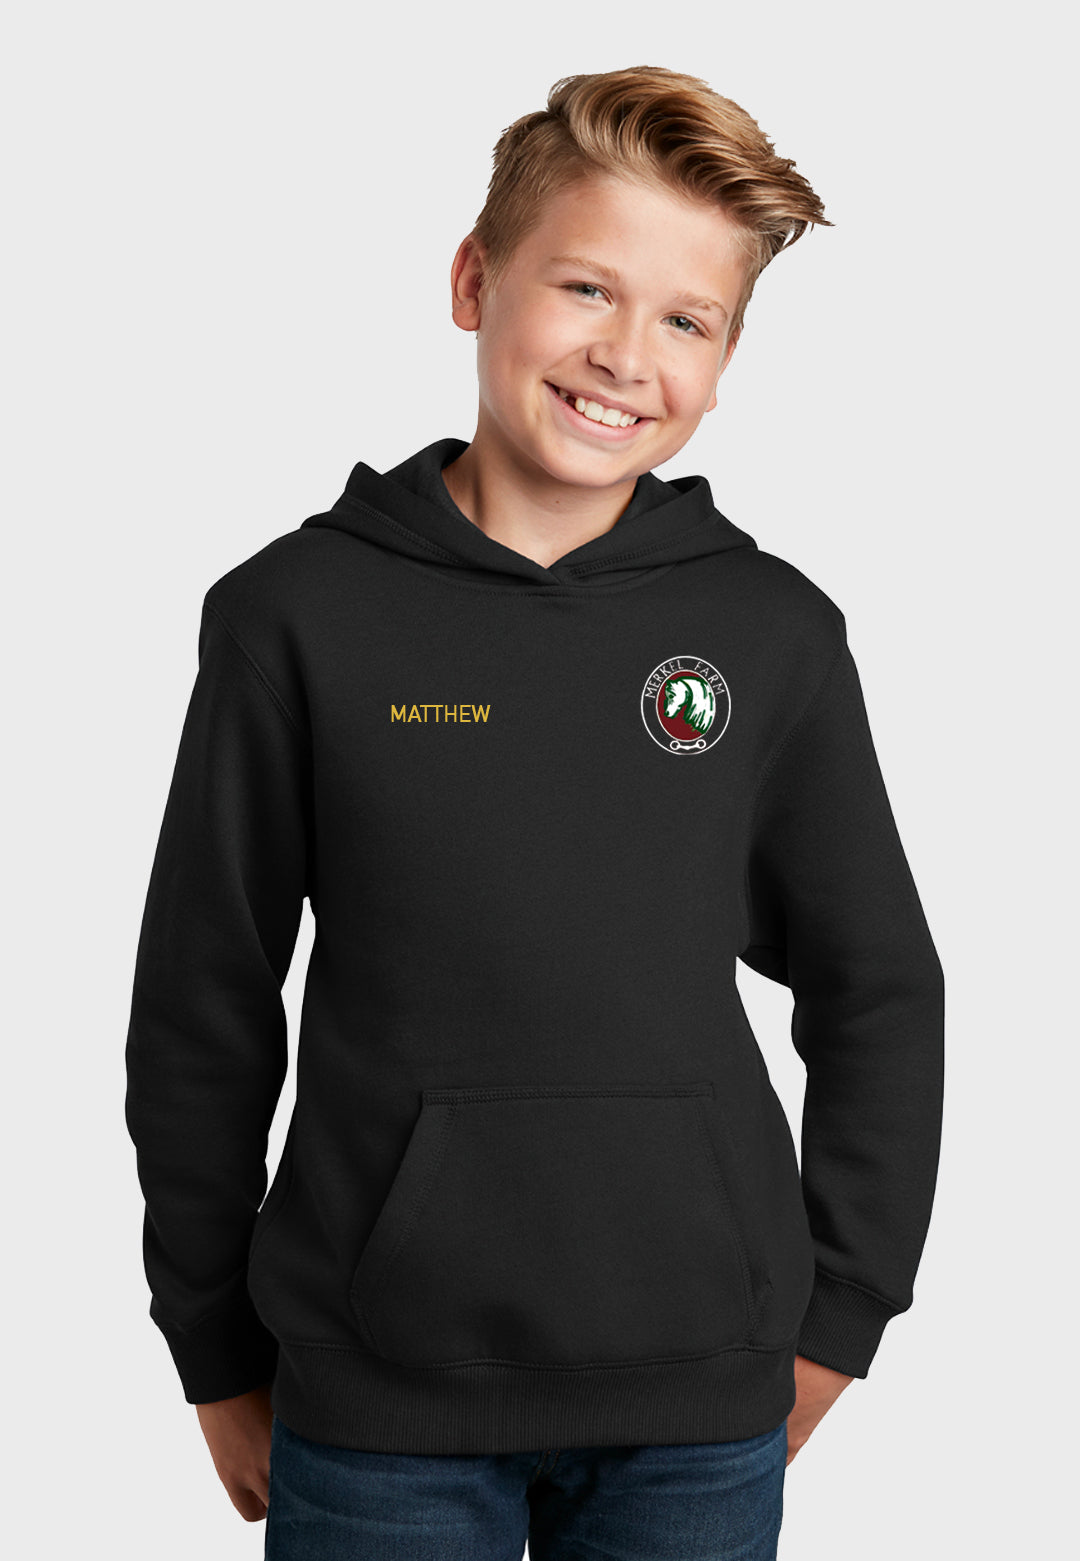 Merkel Farm Equestrian Center Sport-Tek®  Youth Hooded Sweatshirt - Black